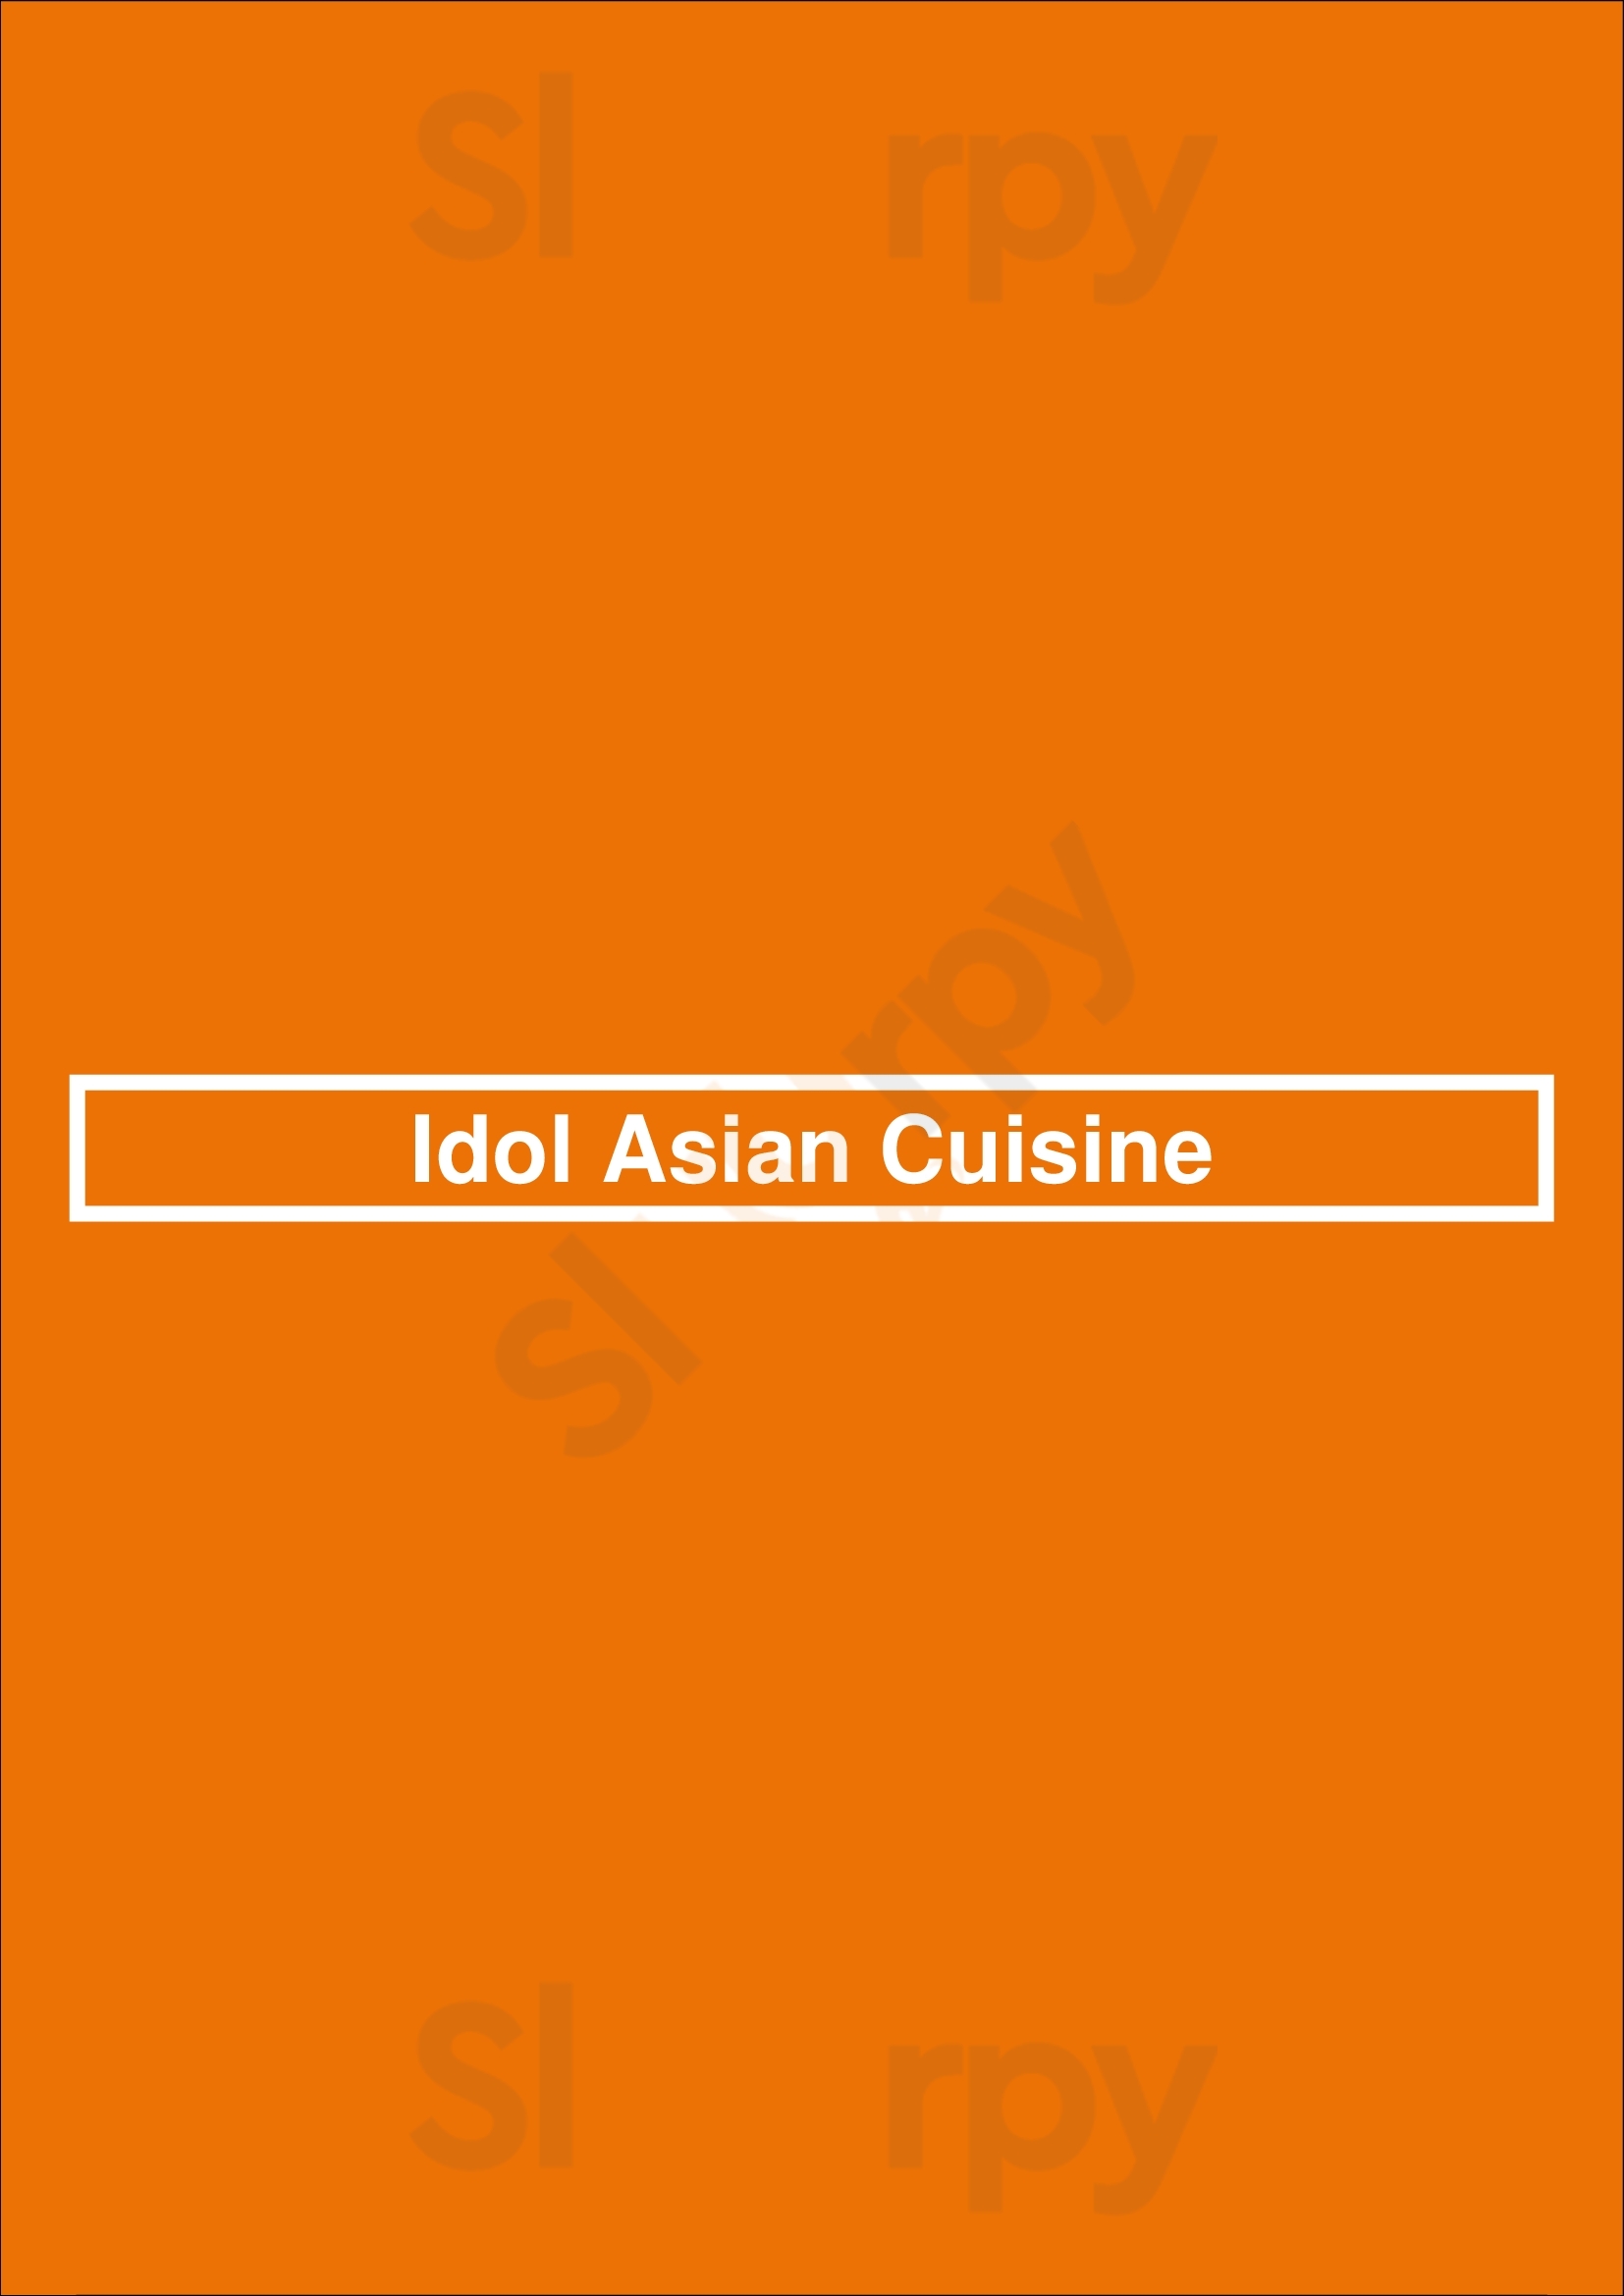 Idol Asian Cuisine Winnipeg Menu - 1